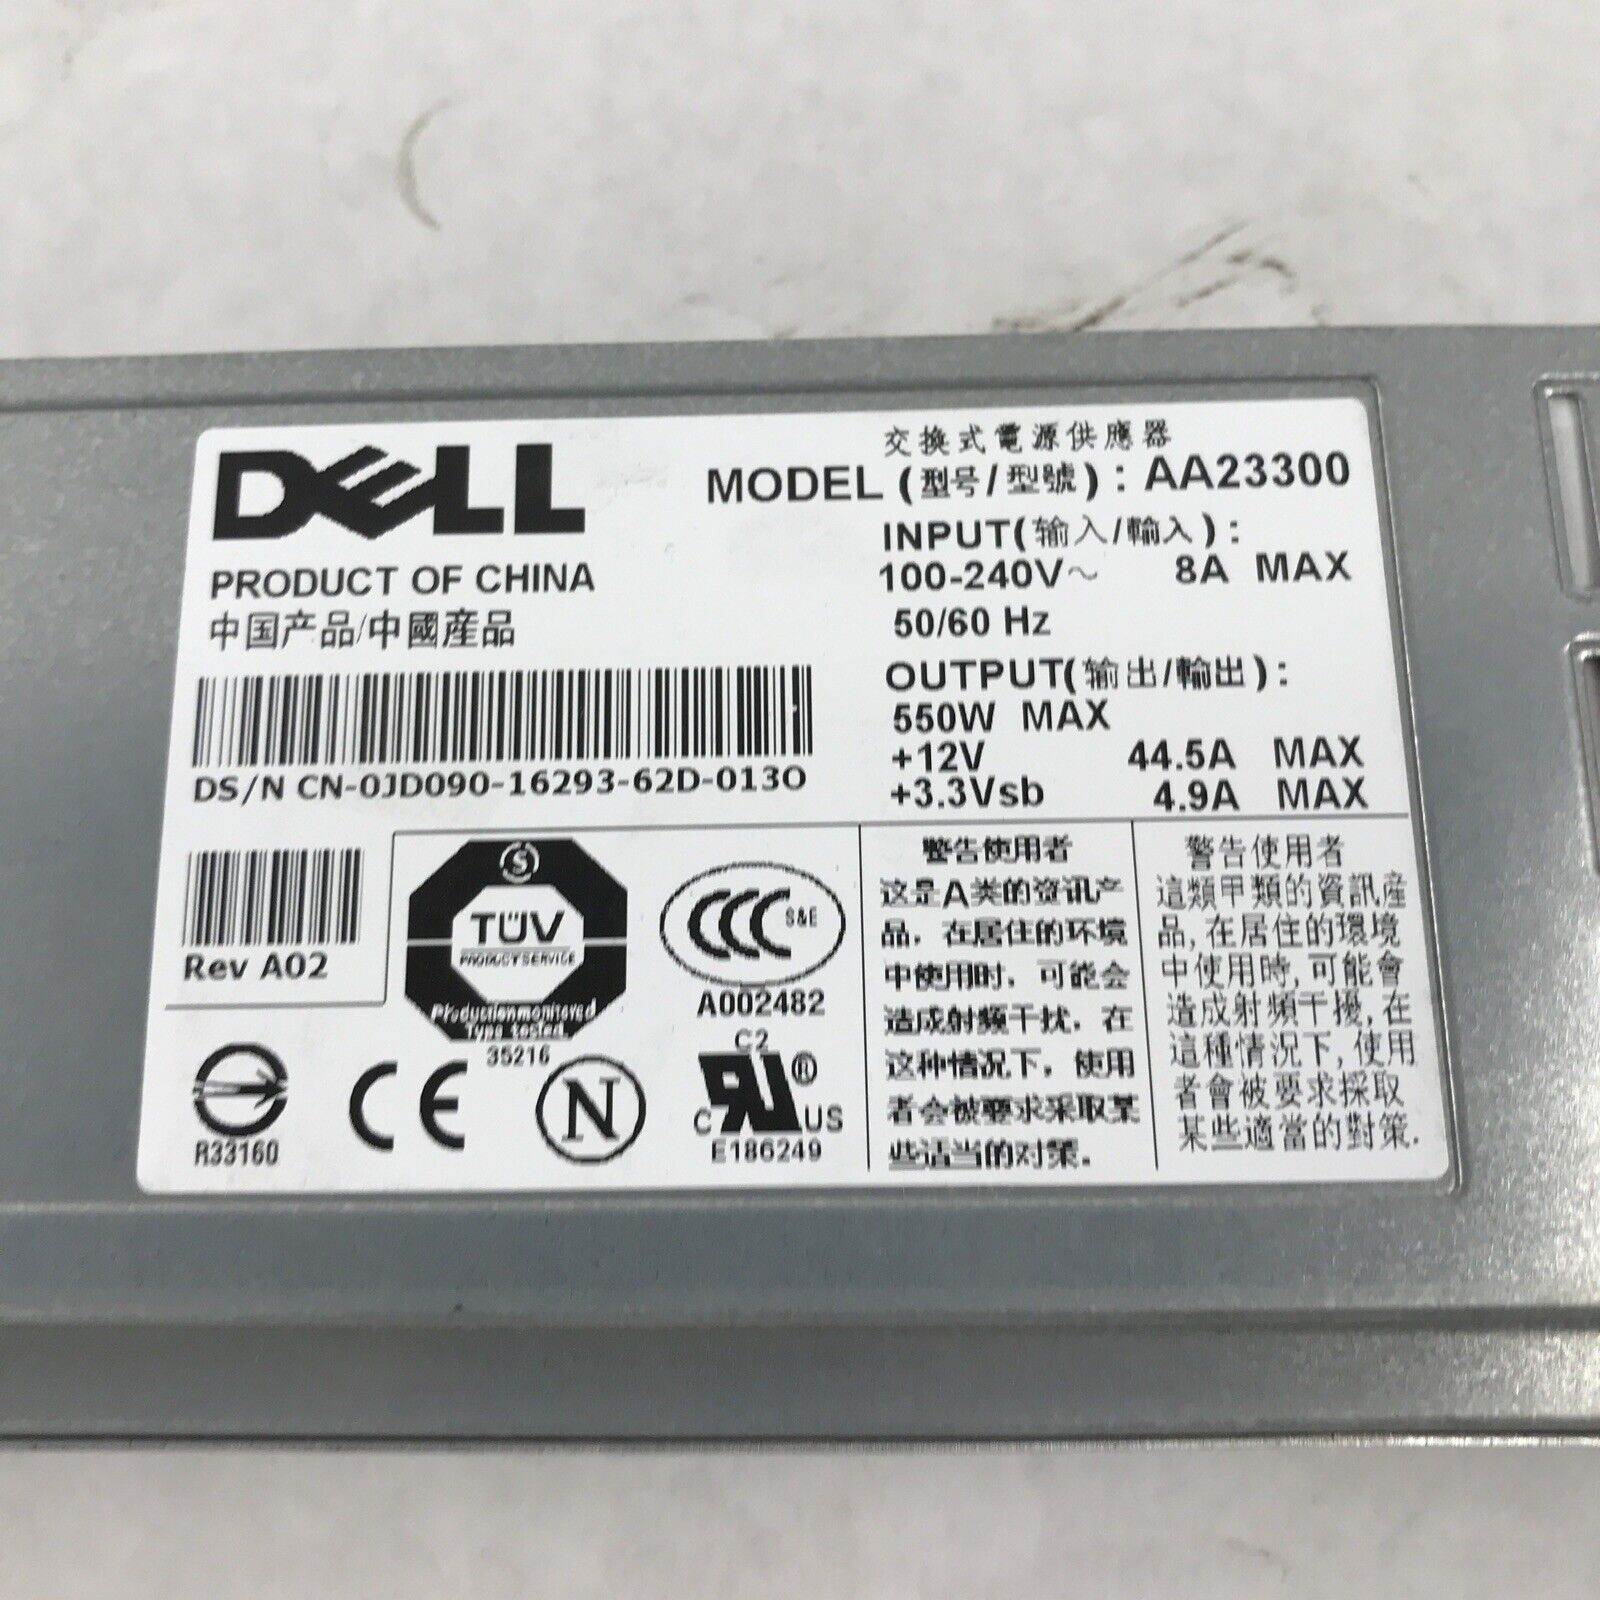 Dell JD090 240V 60Hz 550W 8A Power Supply